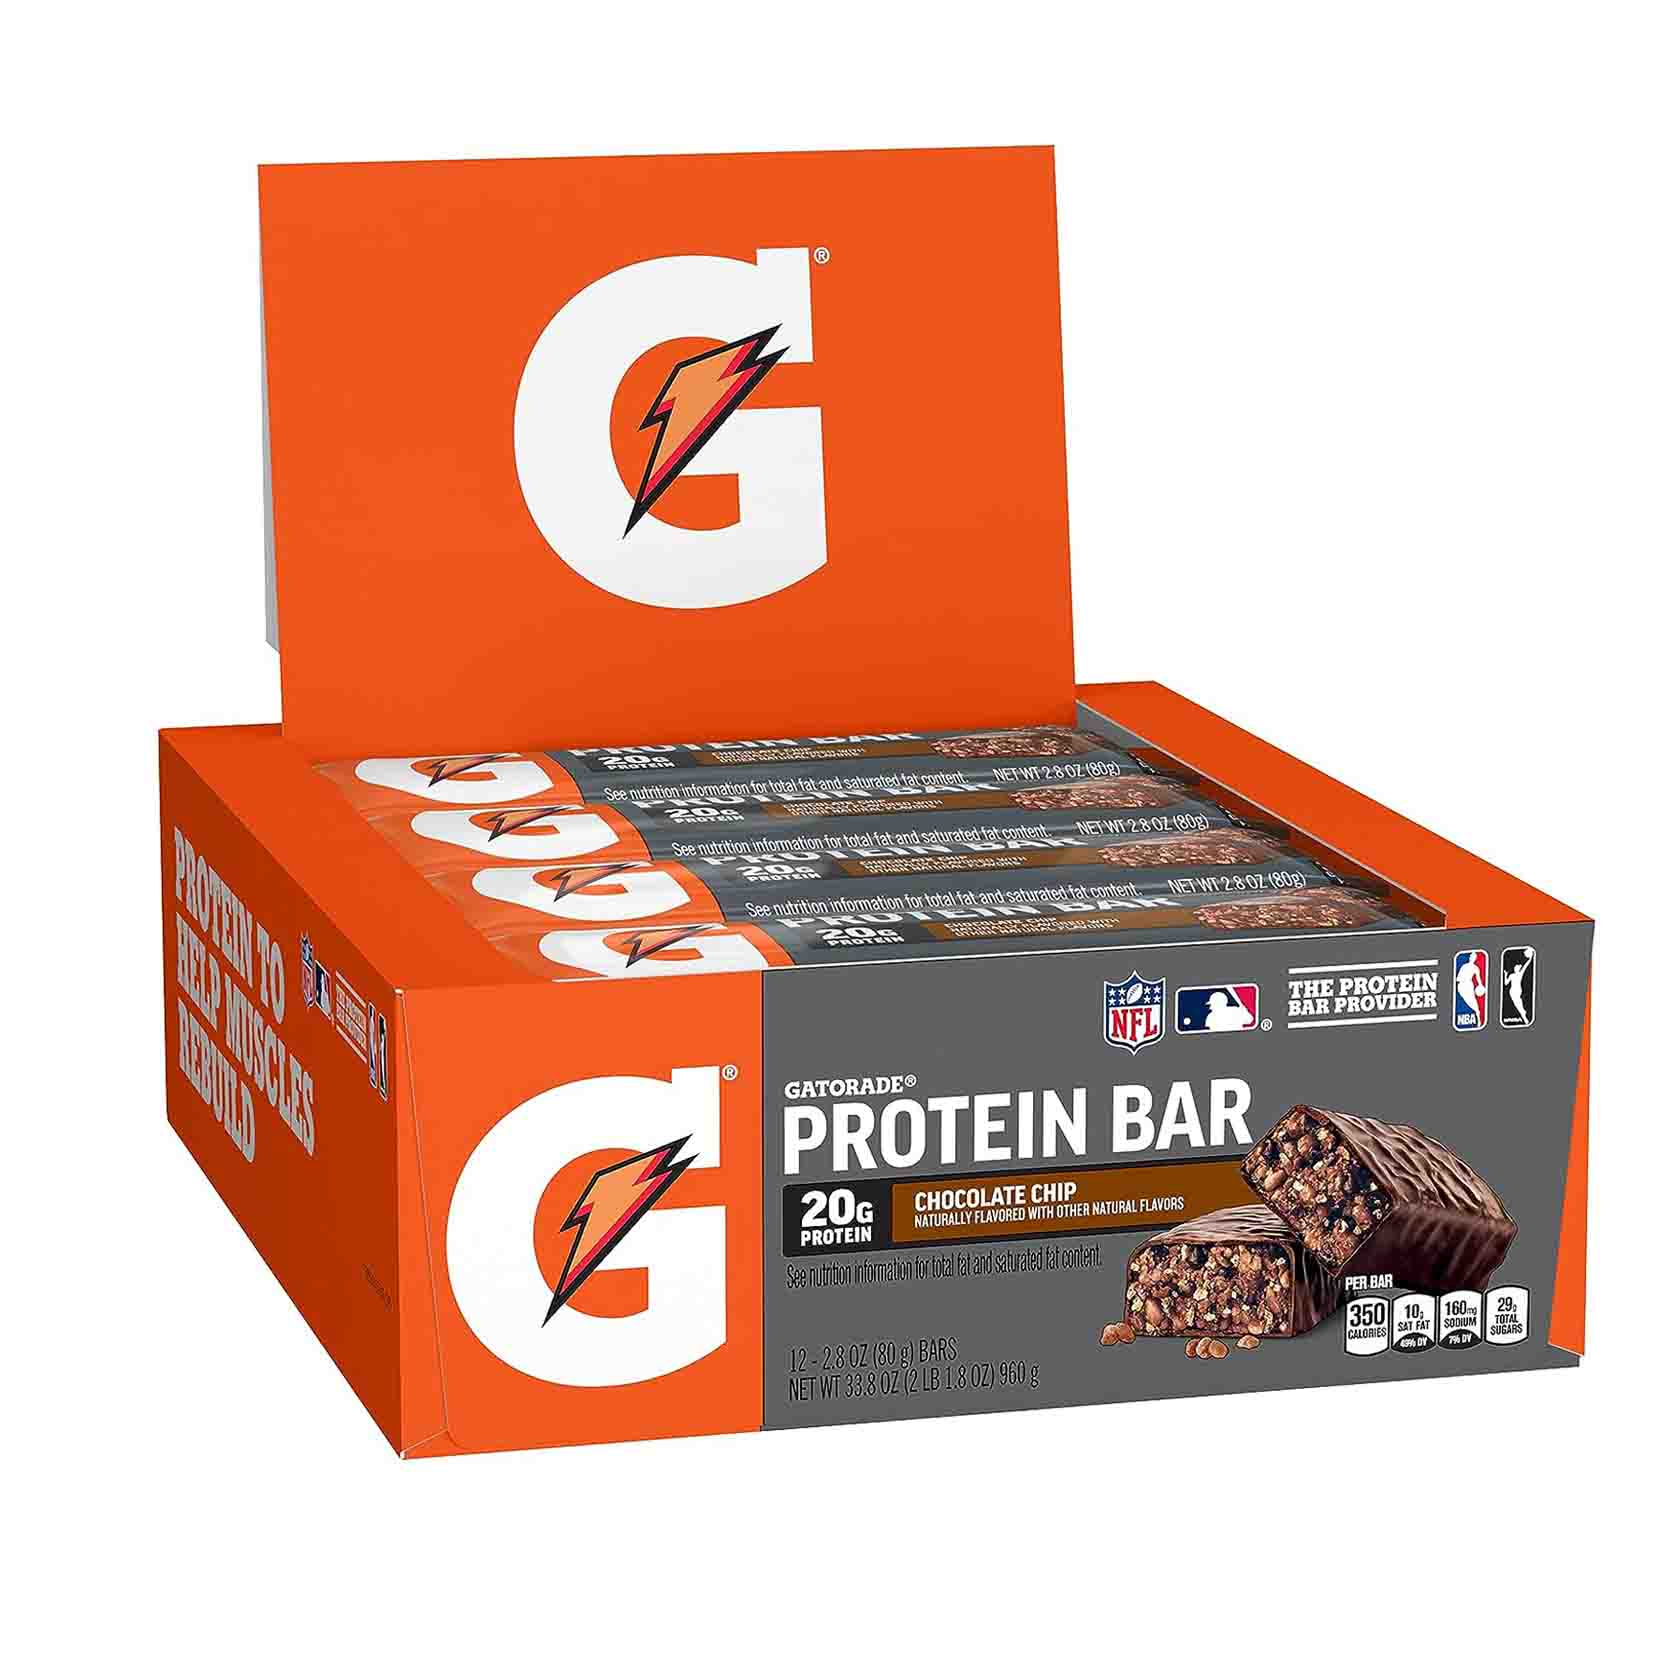 Gatorade Whey Protein Recover Bars in an orange box